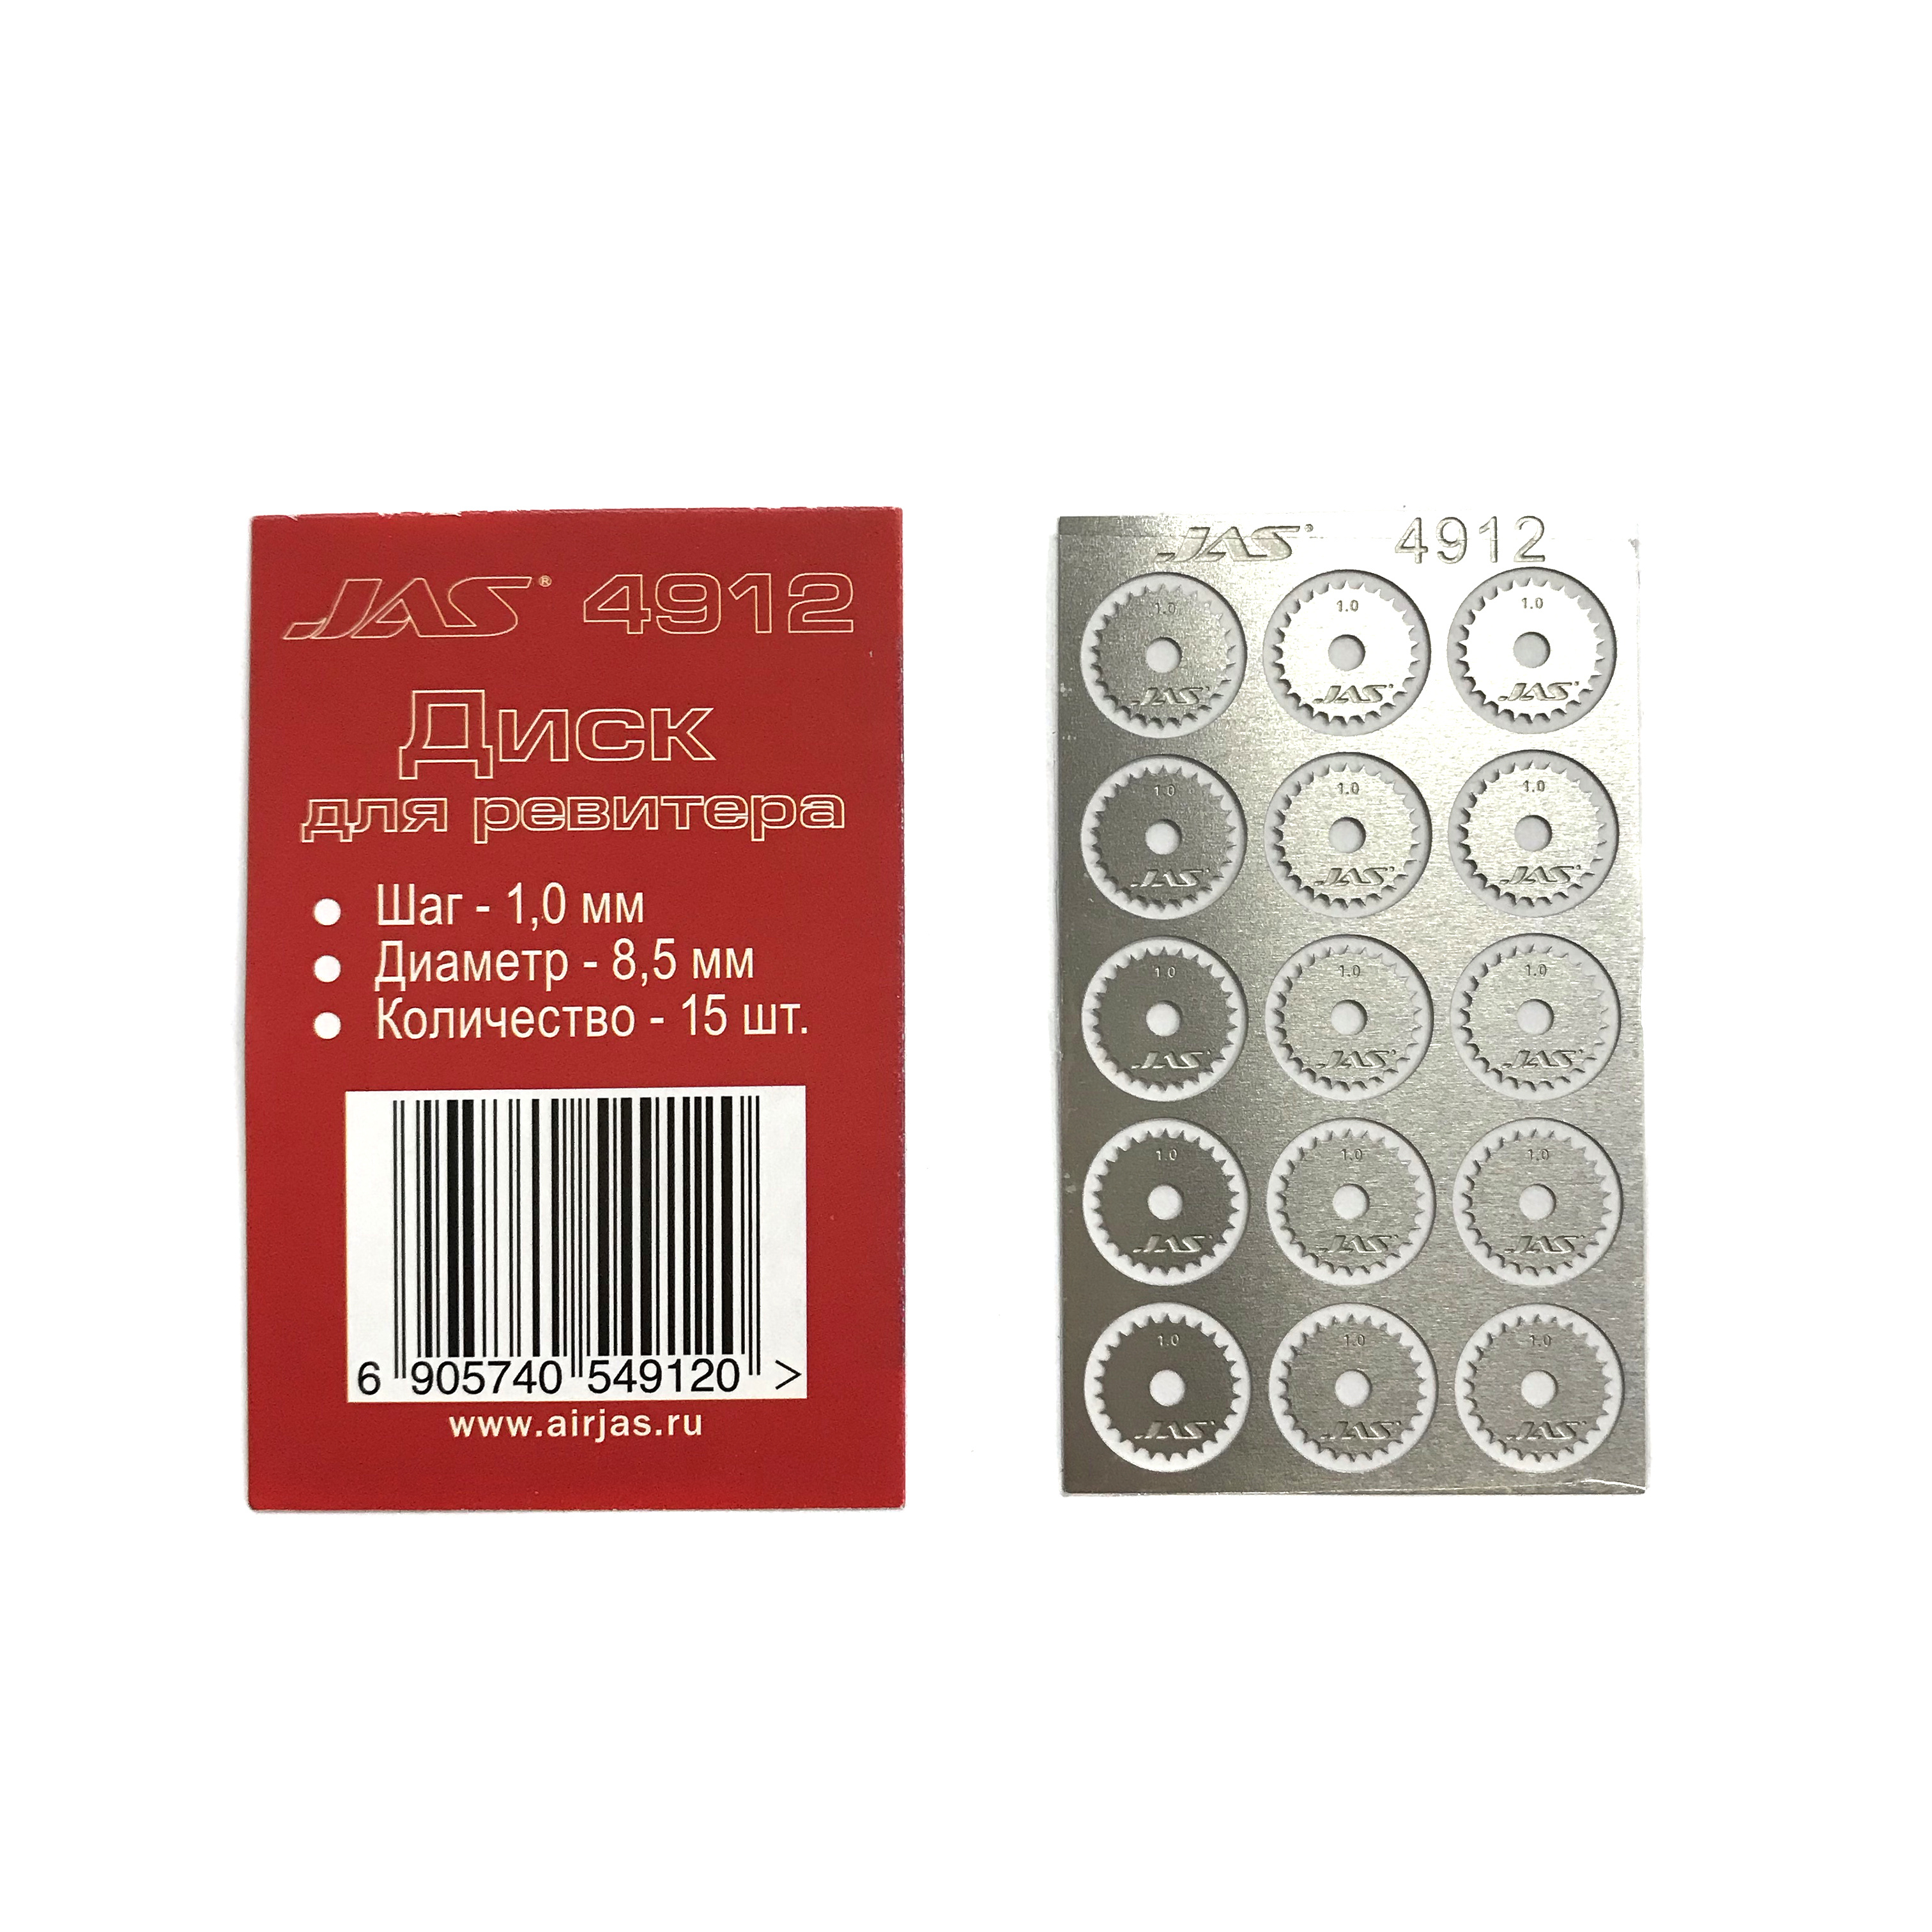 4912 JAS Диск для ревитера d 8,5 мм, шаг 1,0 мм, 15 шт.